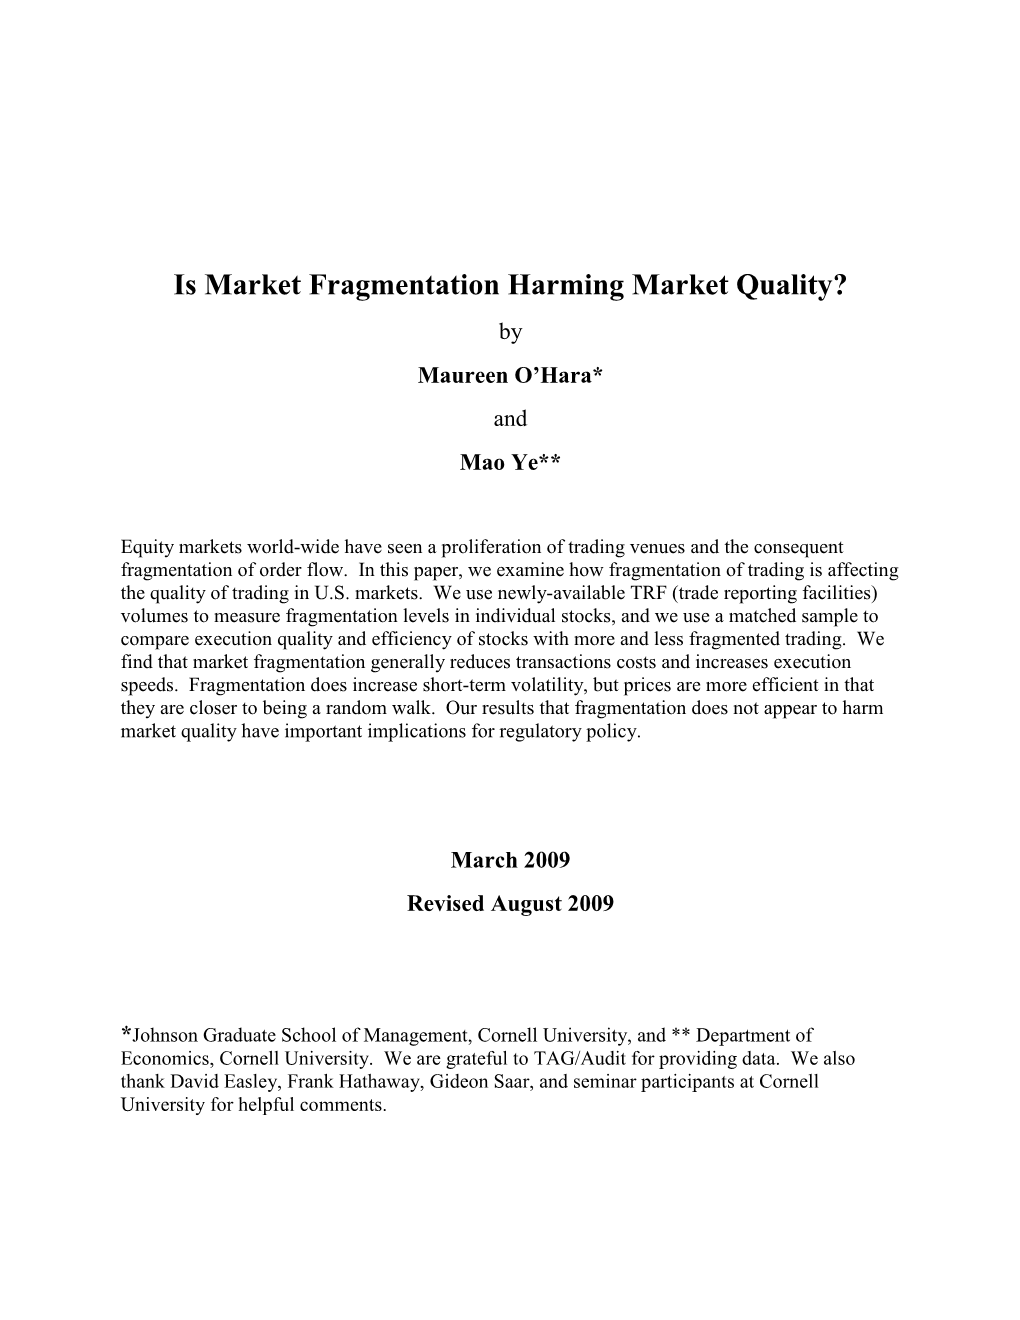 Is Market Fragmentation Harming Market Quality? by Maureen O’Hara* and Mao Ye**